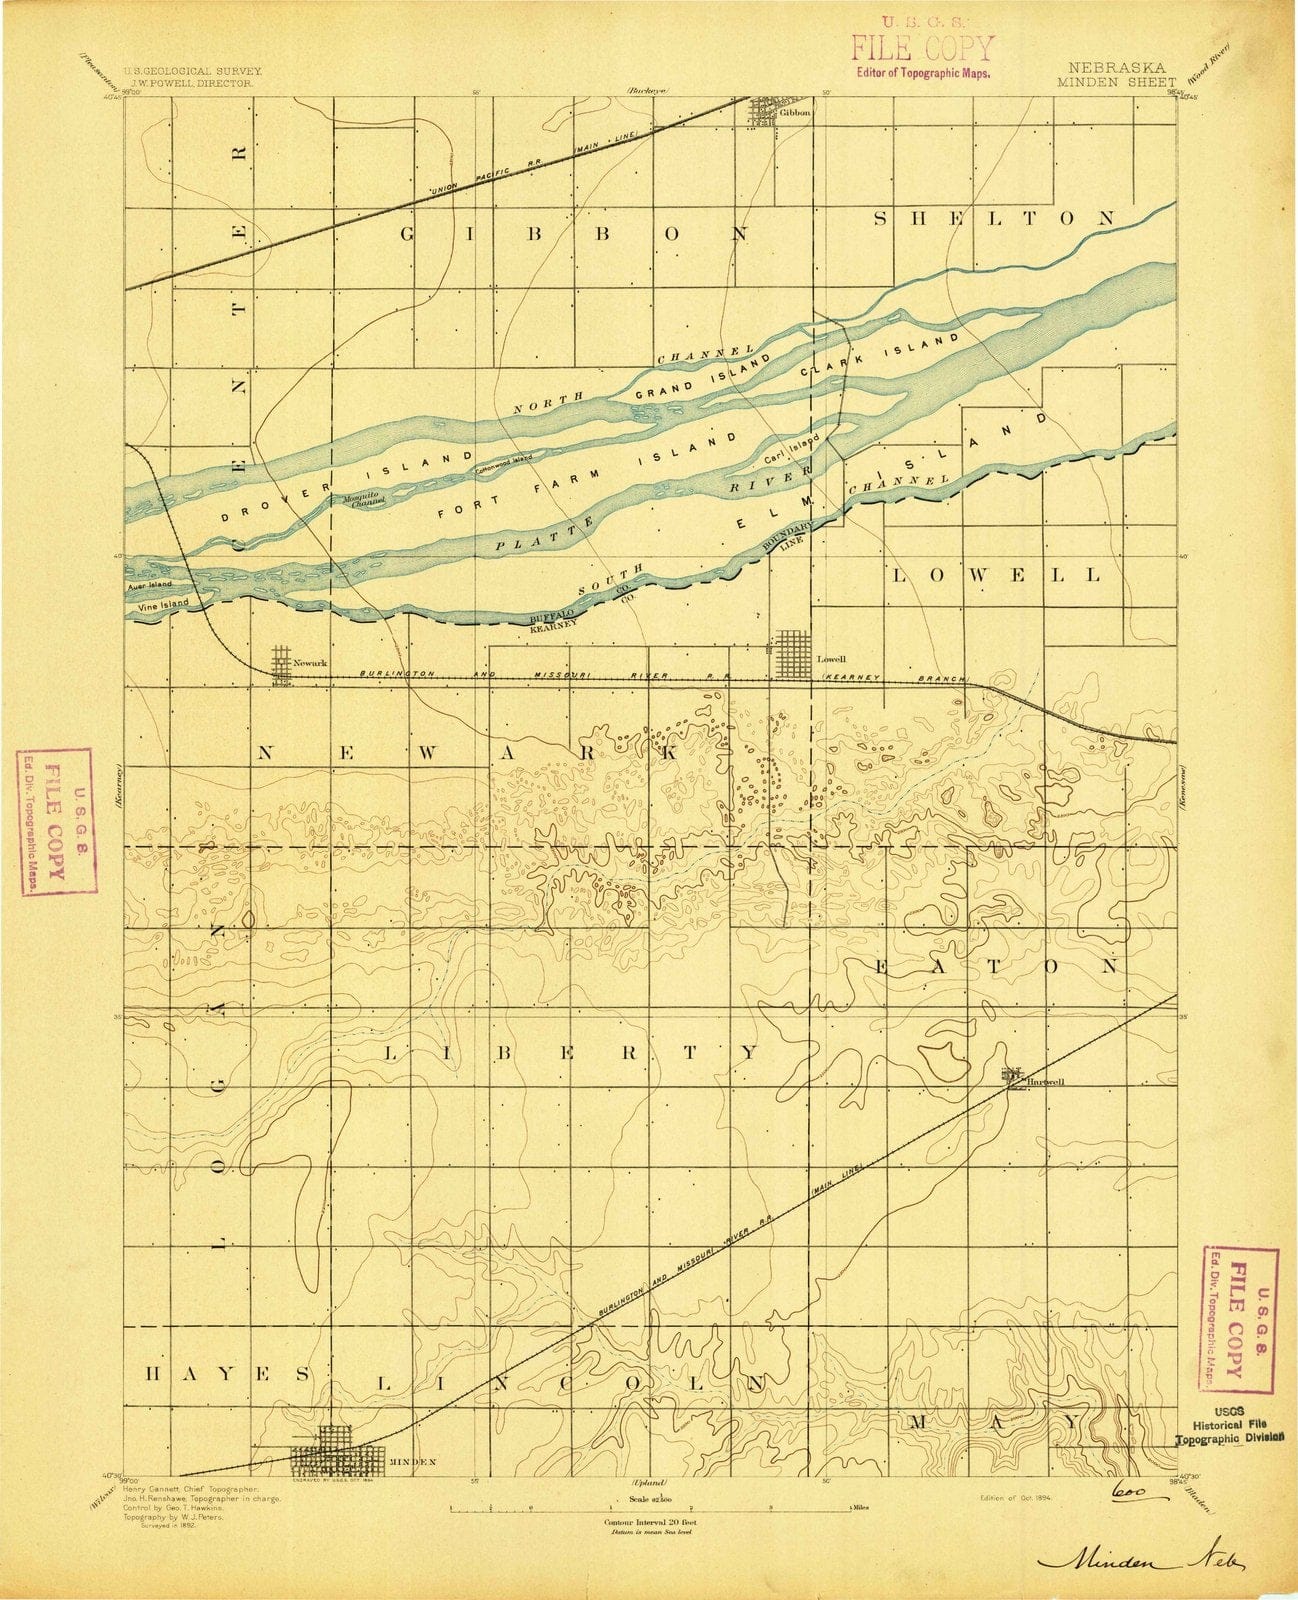 1894 Minden, NE - Nebraska - USGS Topographic Map